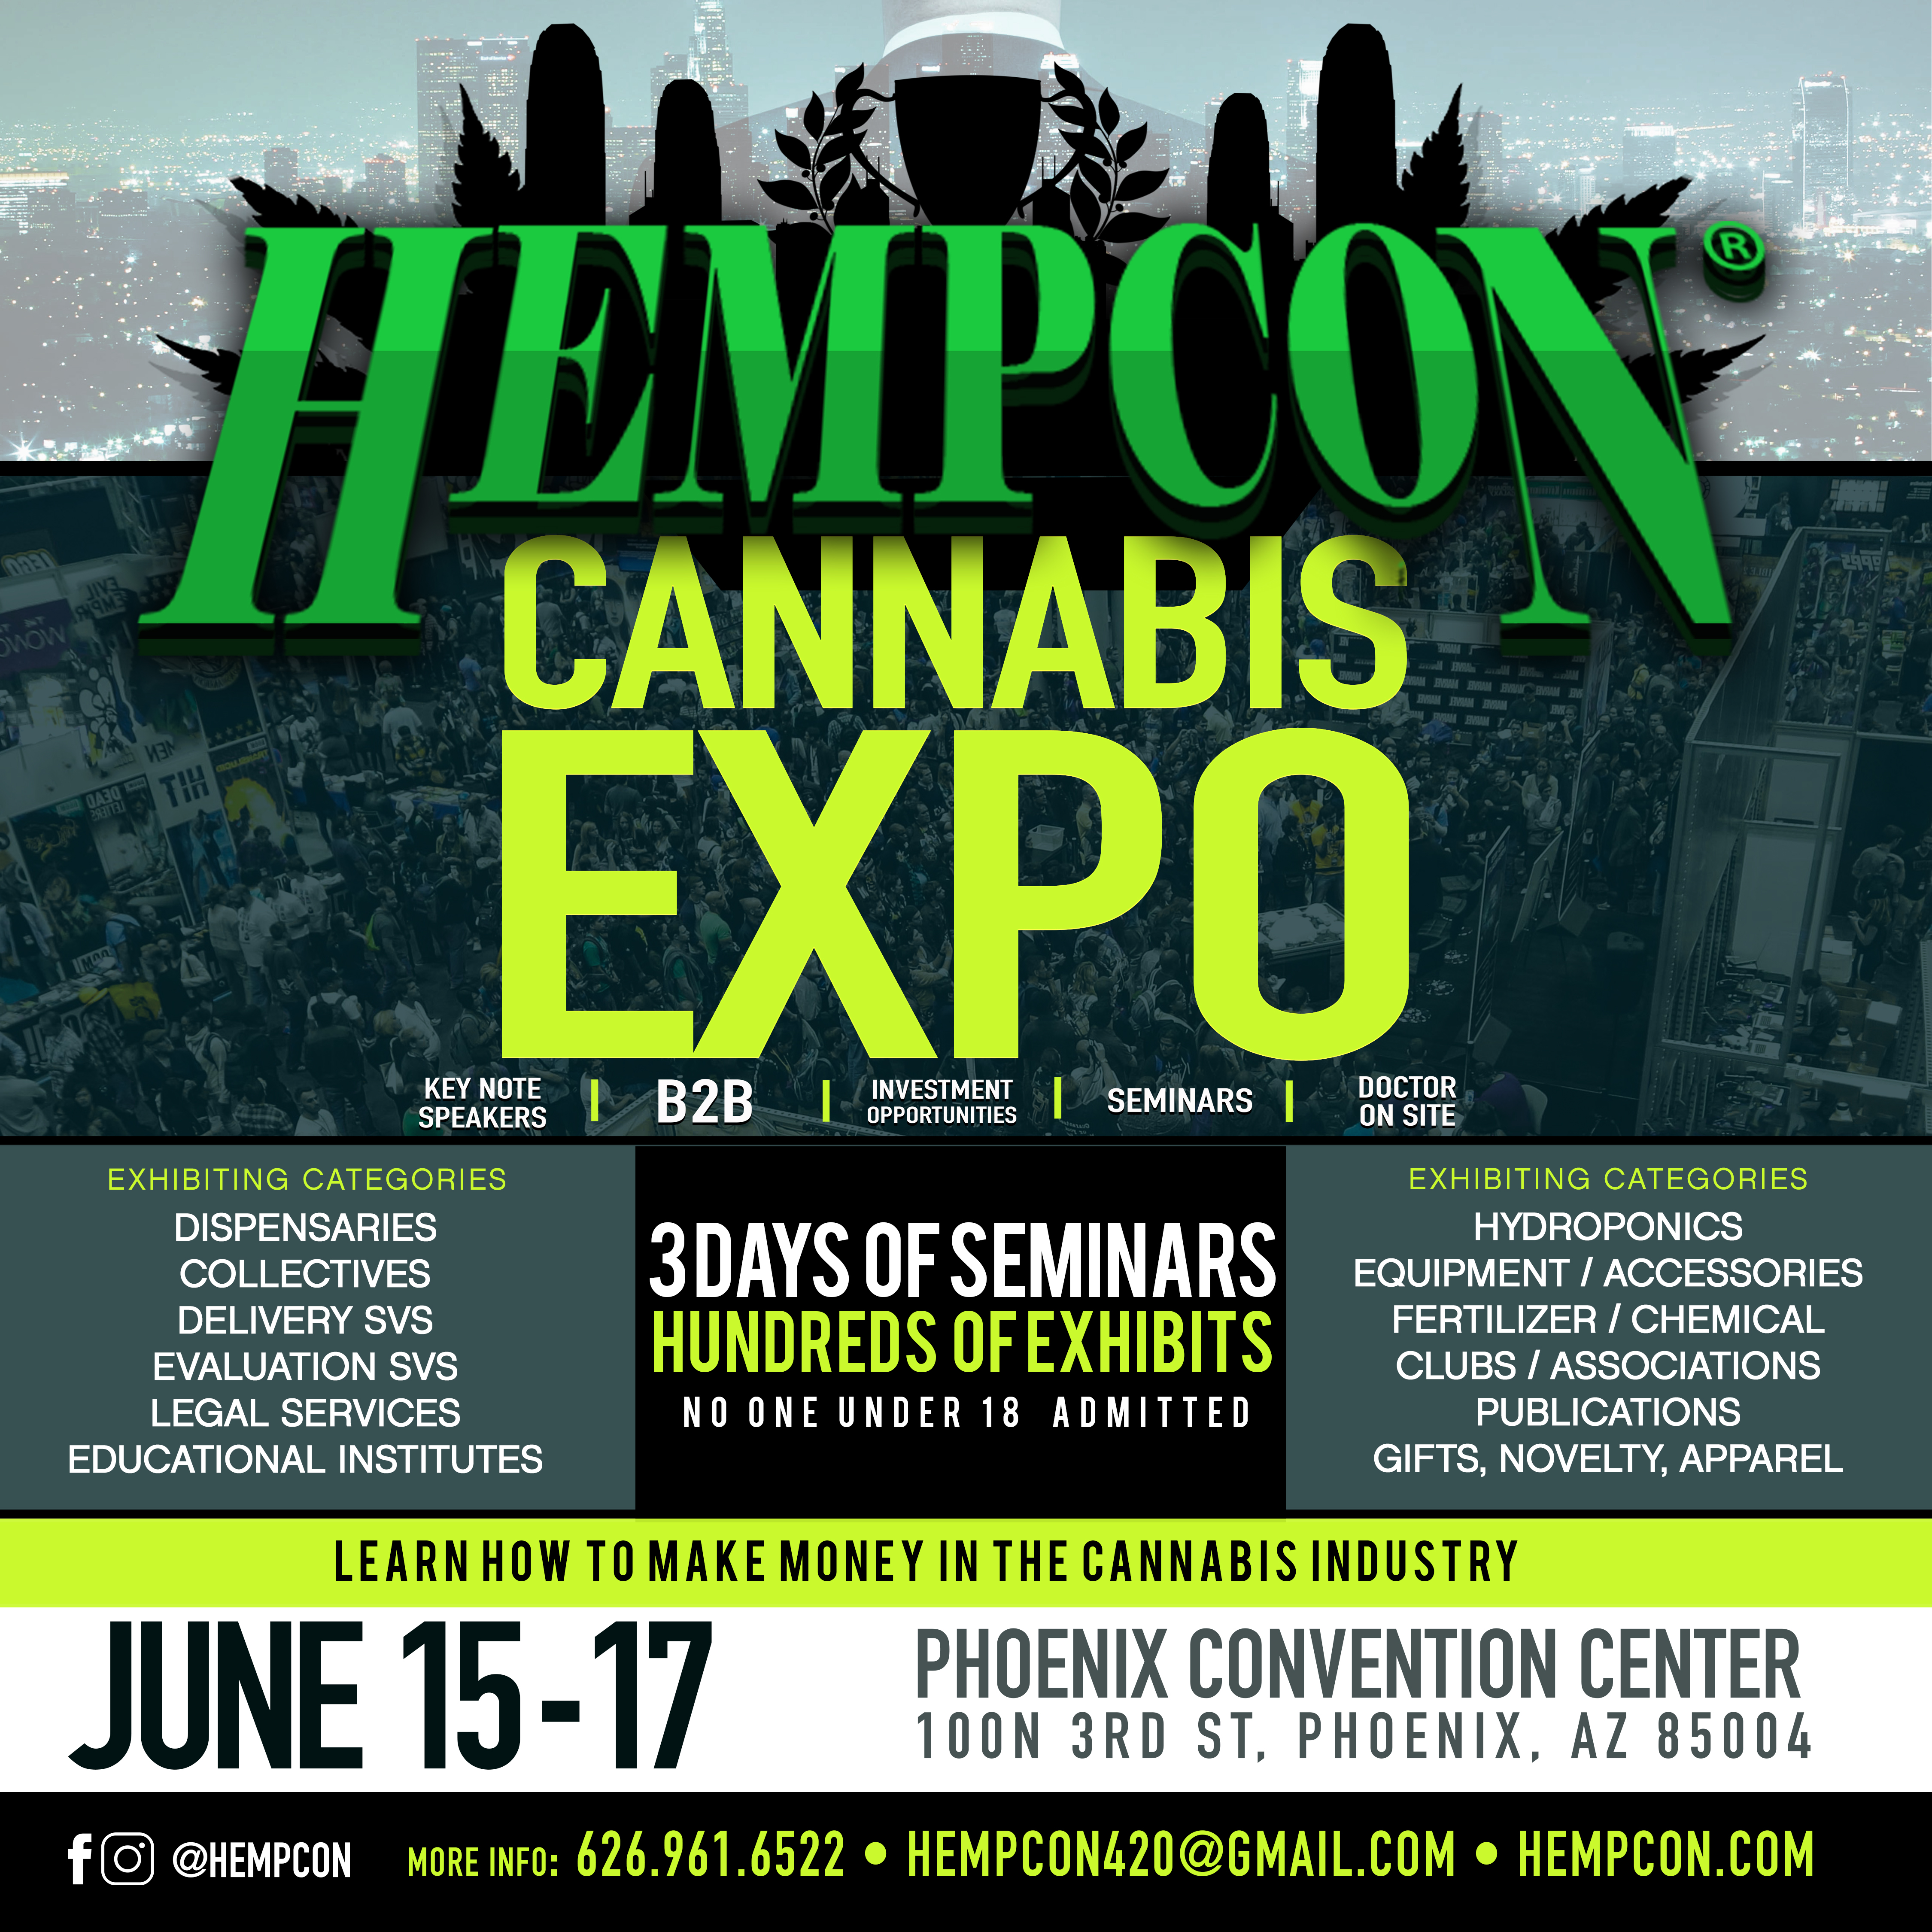 HempCon Cannabis Expo Phoenix June 15-17 at the Phoenix Convention Center